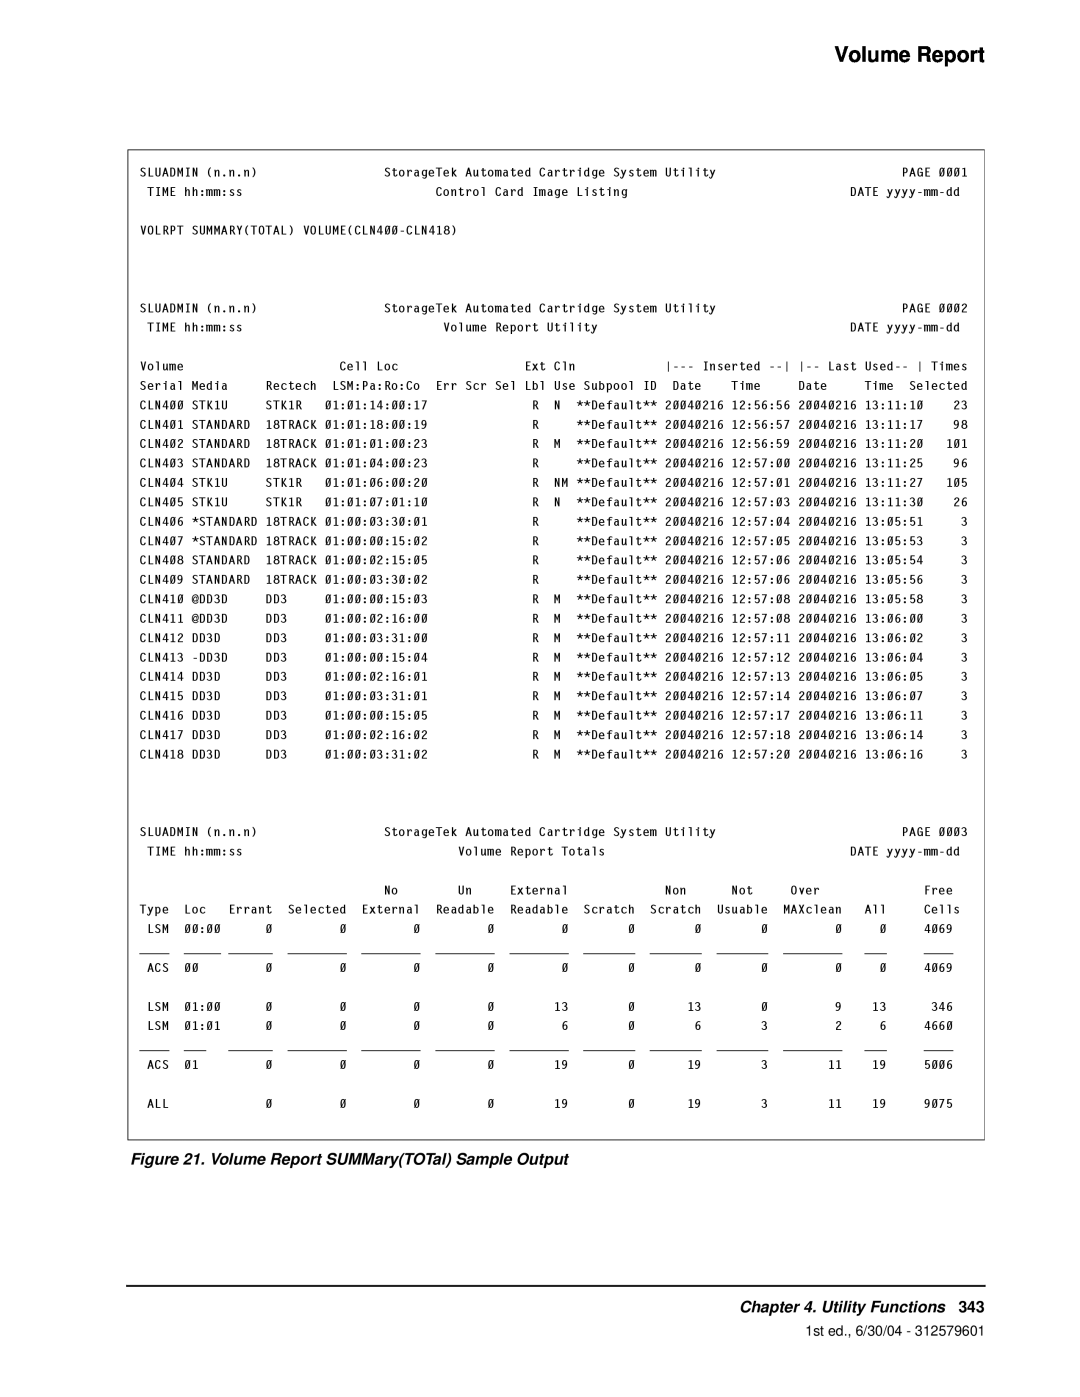 StorageTek manual Volume Report, Utility Functions, 1st ed., 6/30/04 